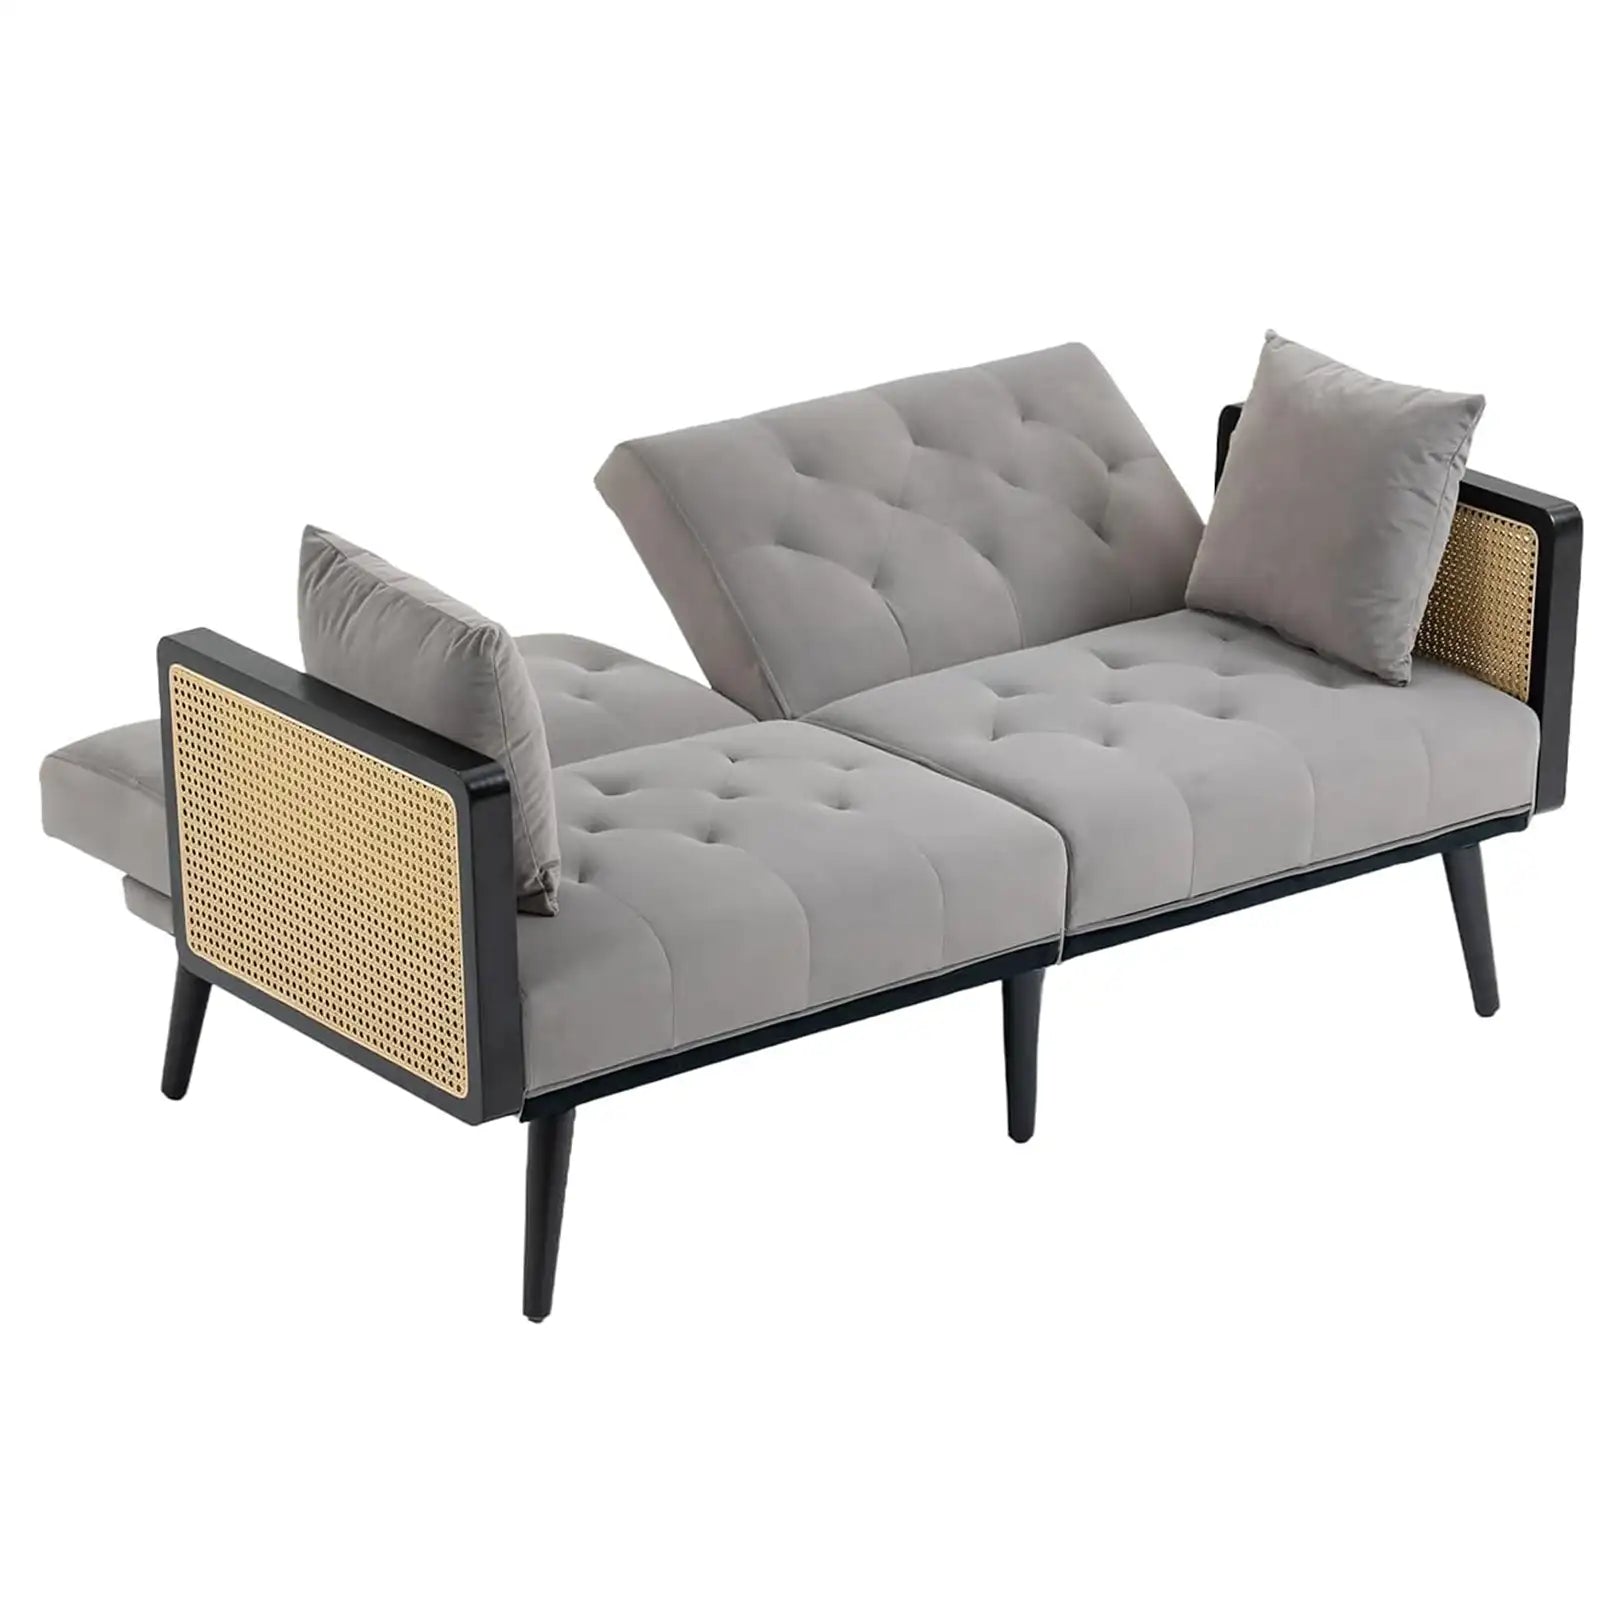 Sofá capitoné de ratán, sofá cama de lino moderno, sofá de dos plazas tapizado cómodo y grande